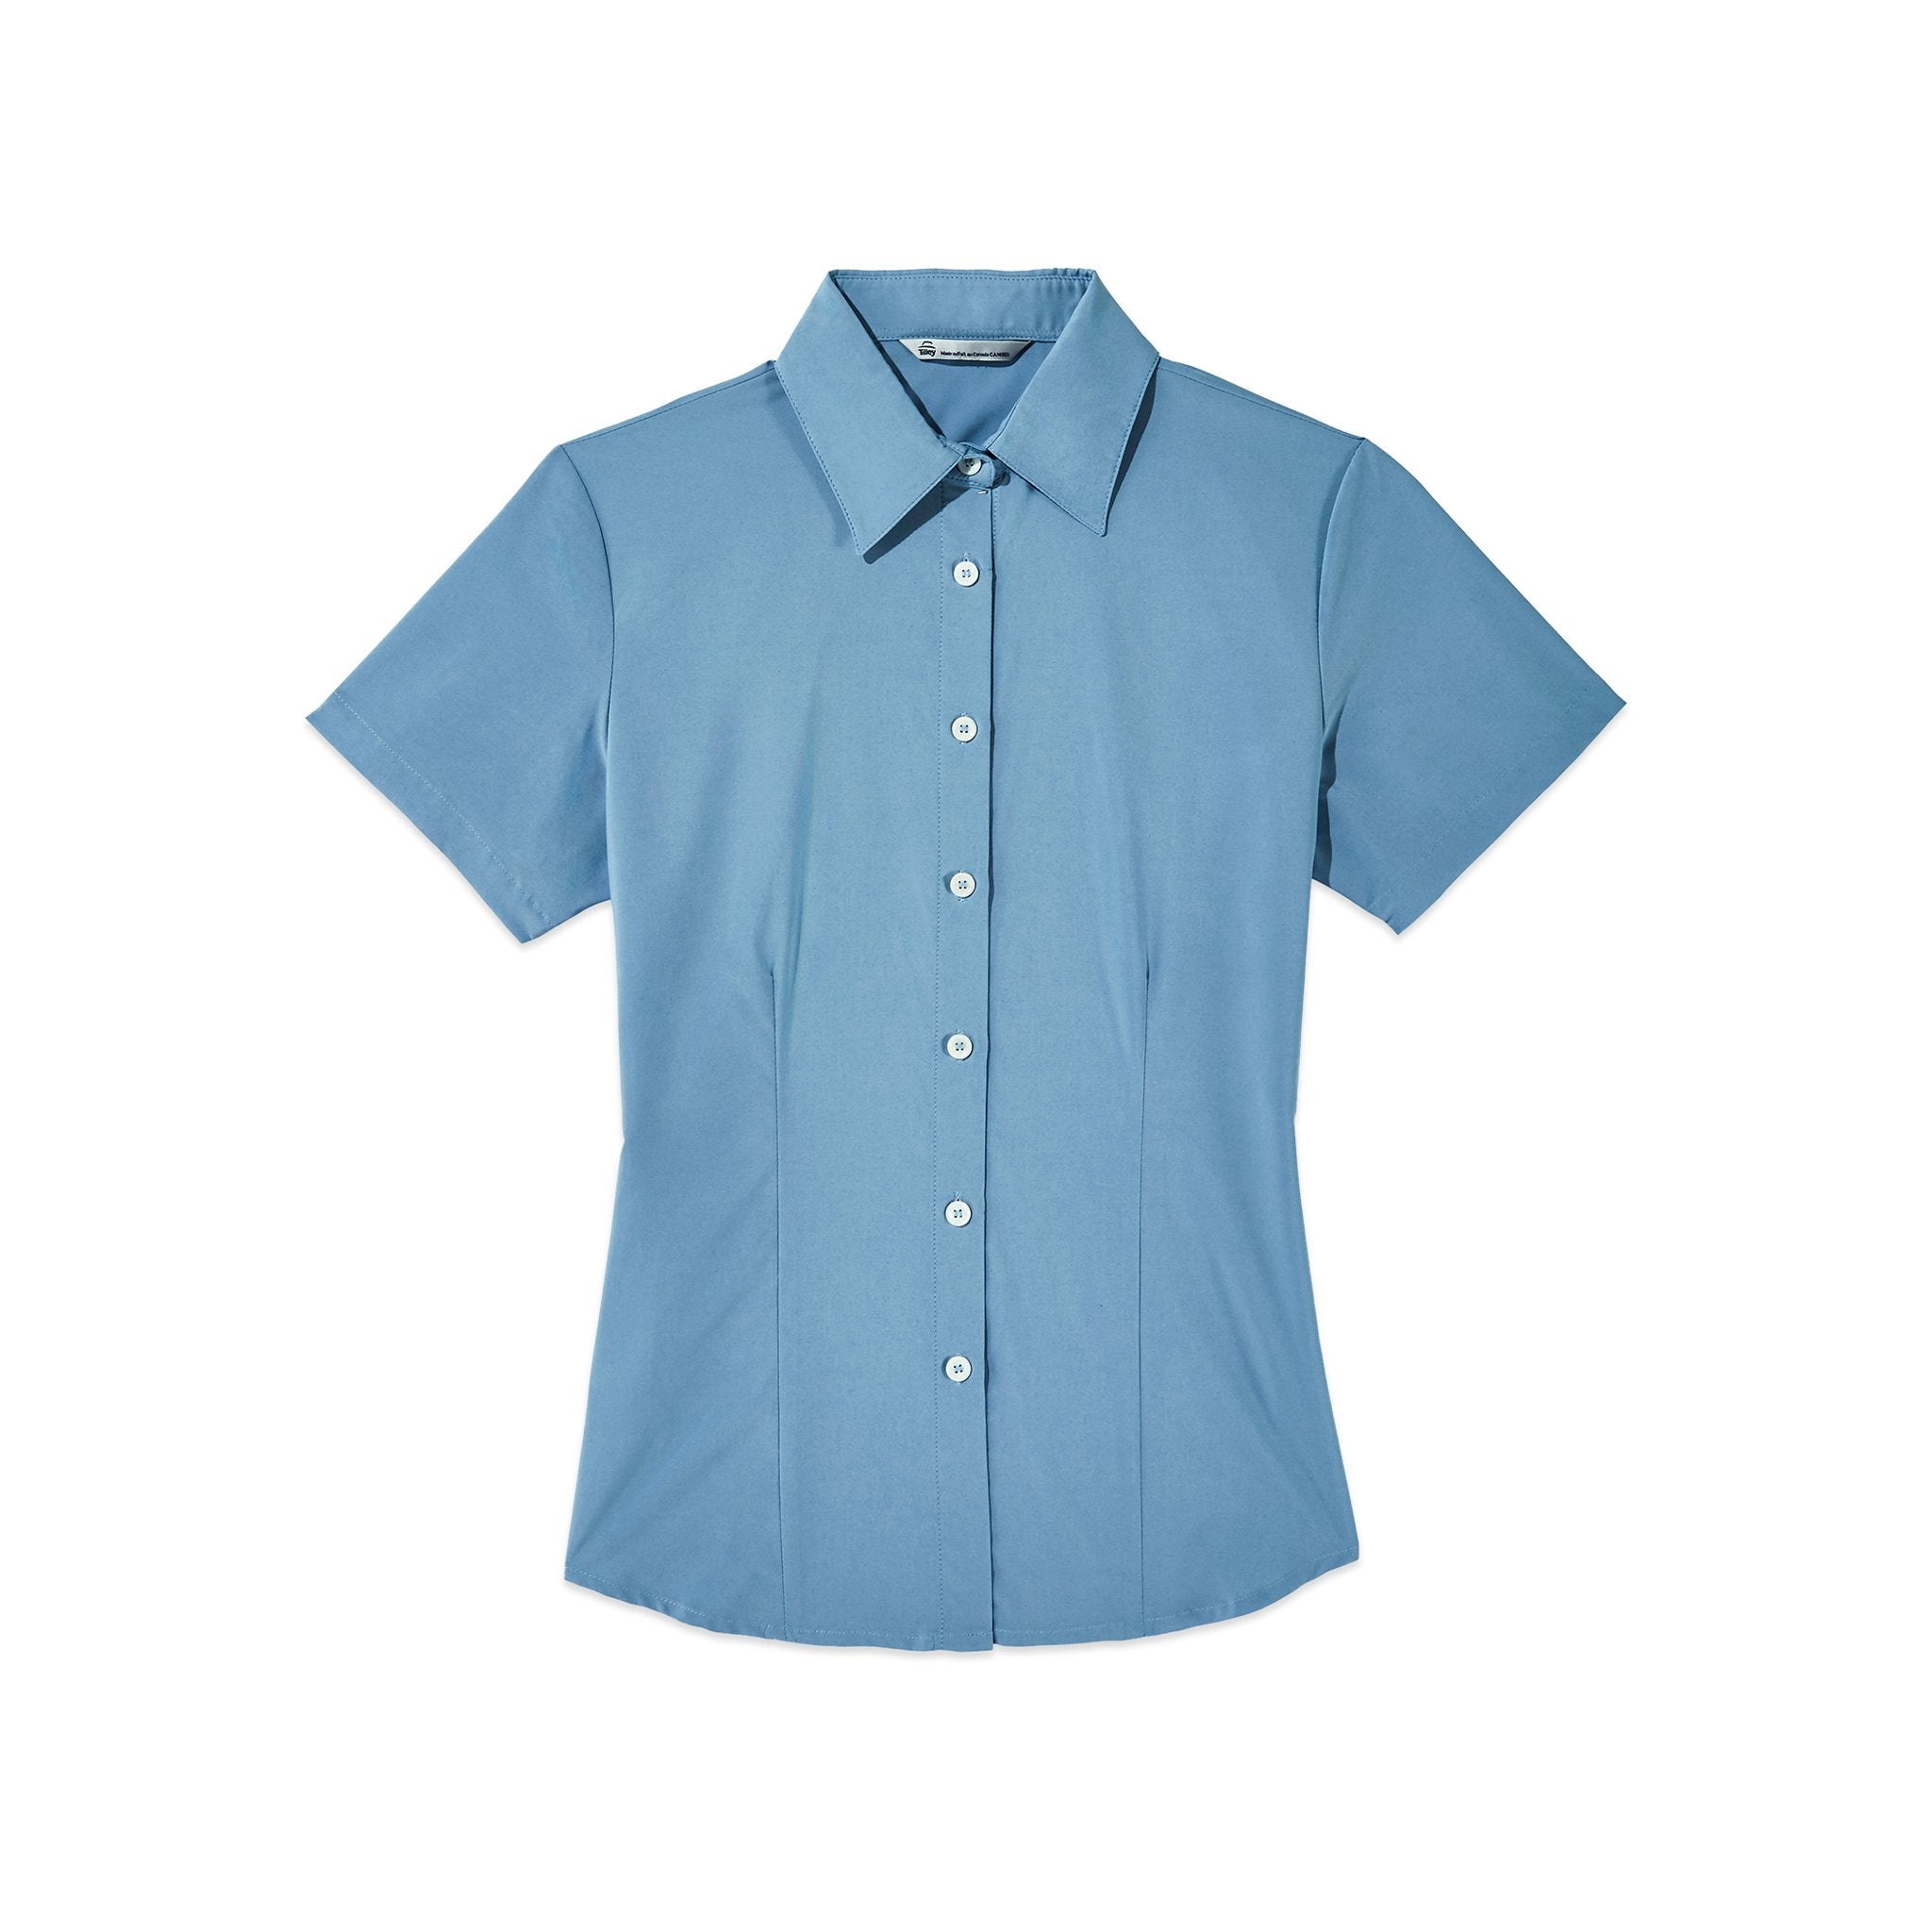 Tilley NW15 Tech AIRFLO® Shirt in Blue